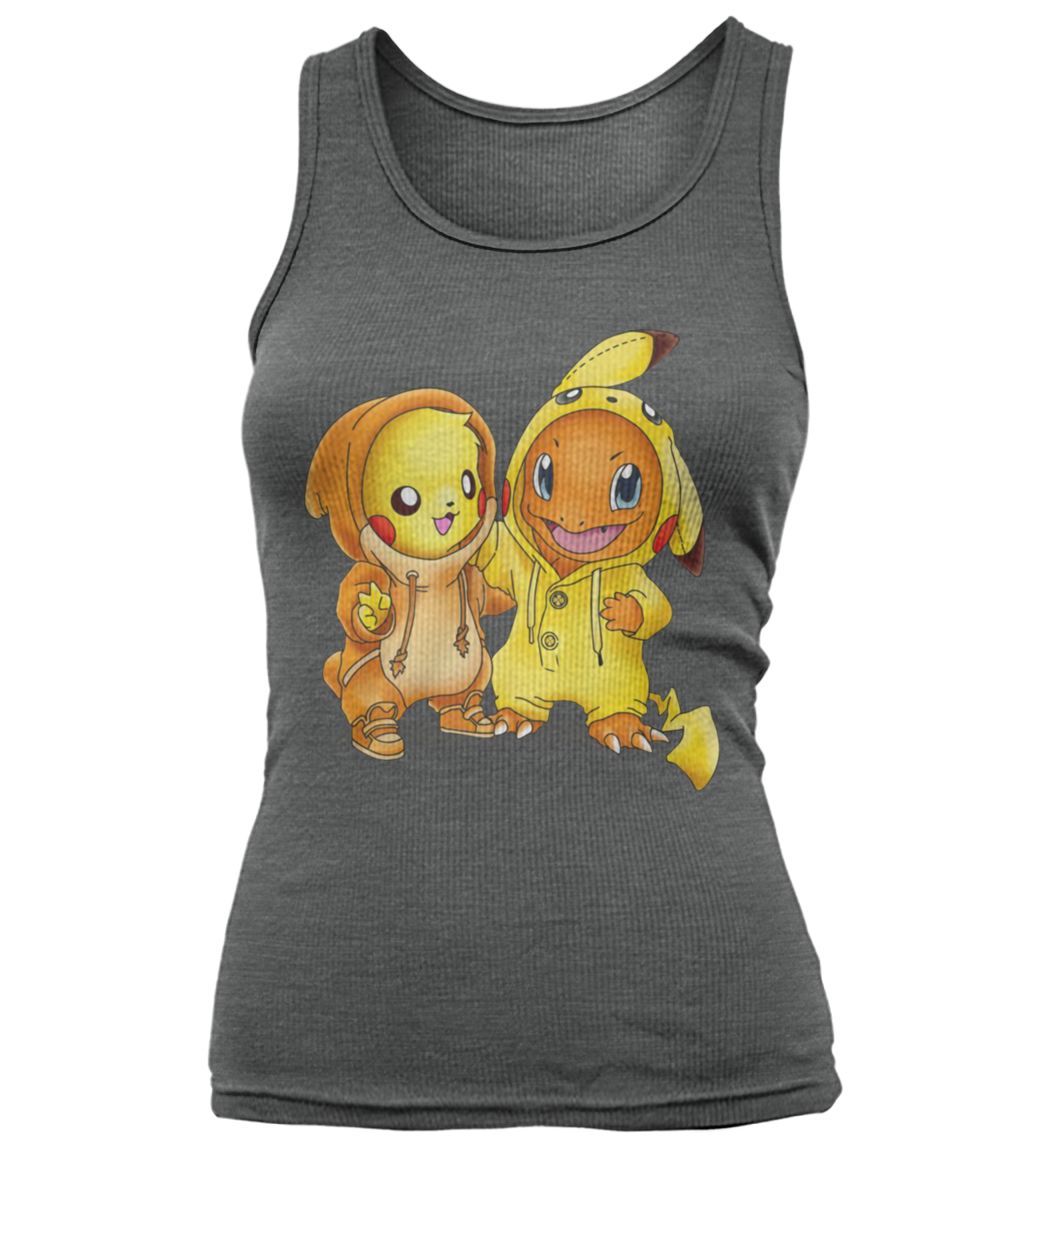 Baby pikachu hitokage charmander costume women's tank top